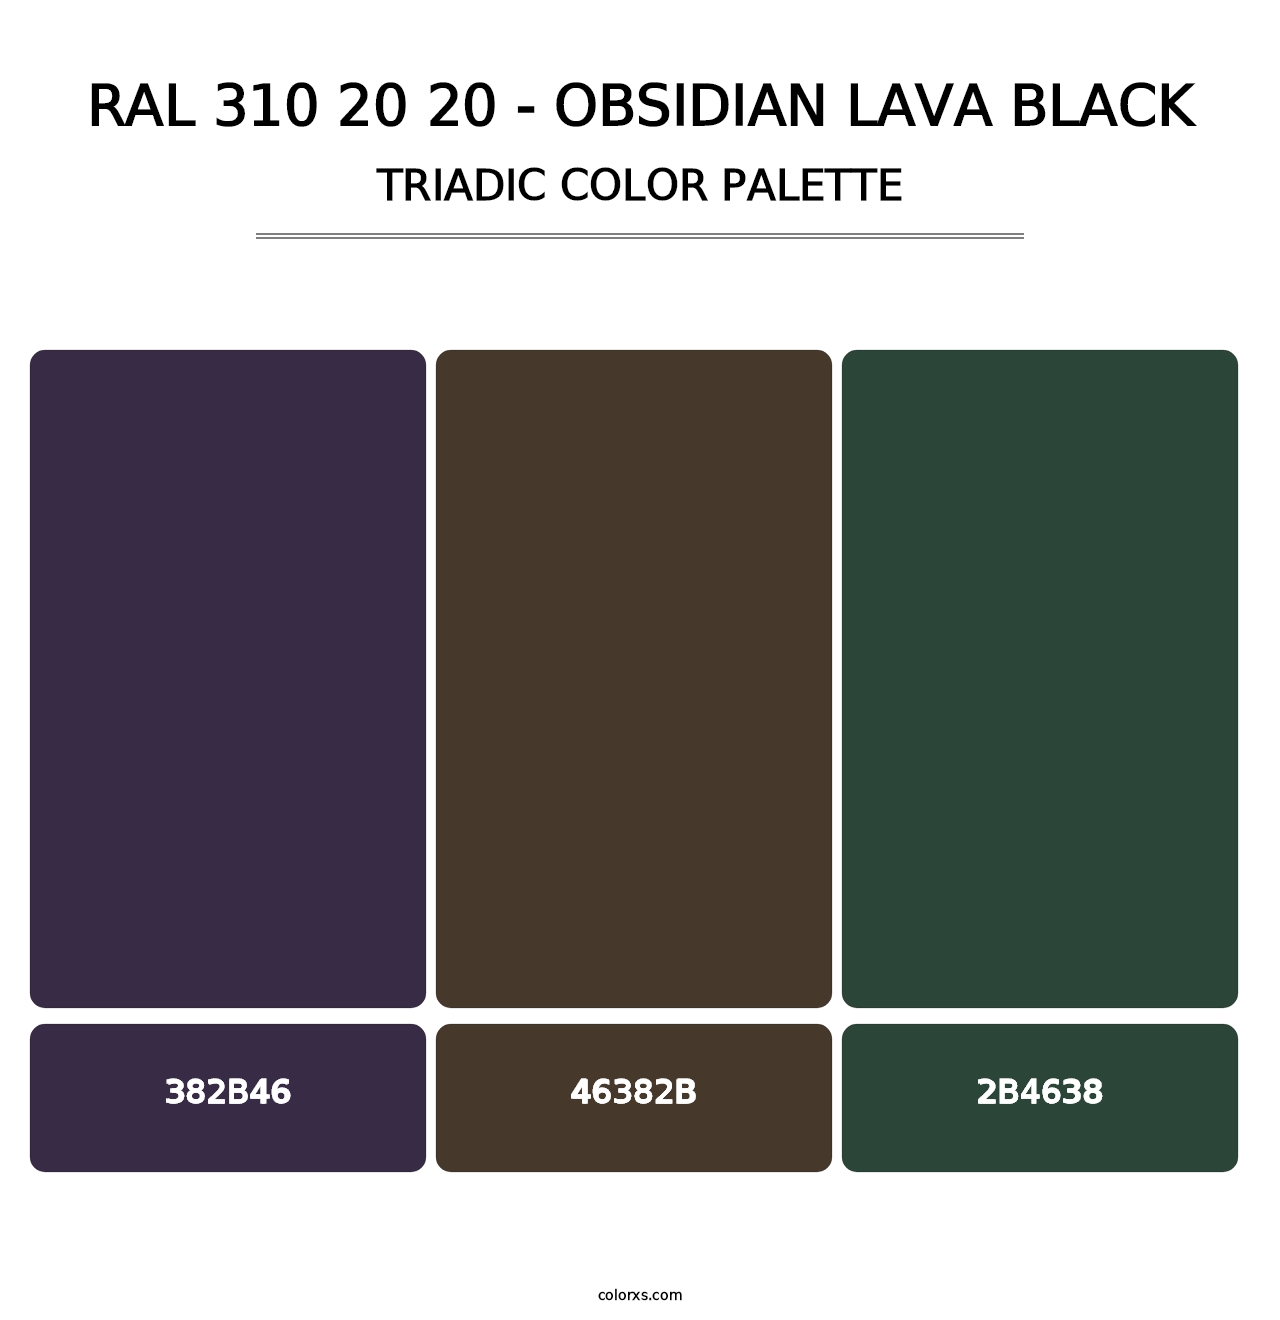 RAL 310 20 20 - Obsidian Lava Black - Triadic Color Palette